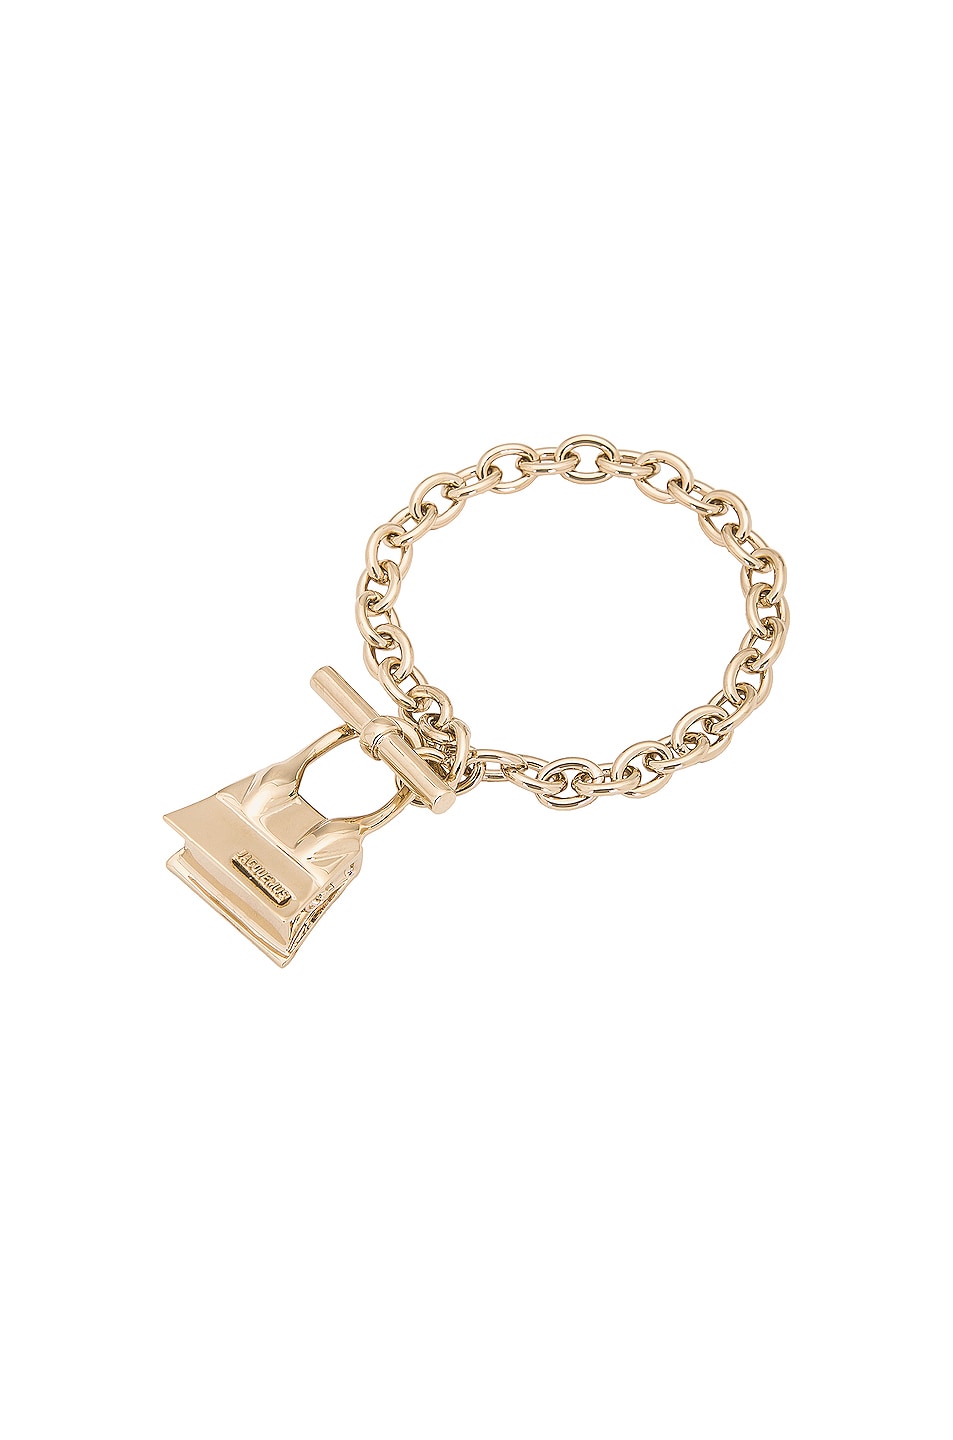 JACQUEMUS Le Bracelet Chiquito Barr in Light Gold | FWRD